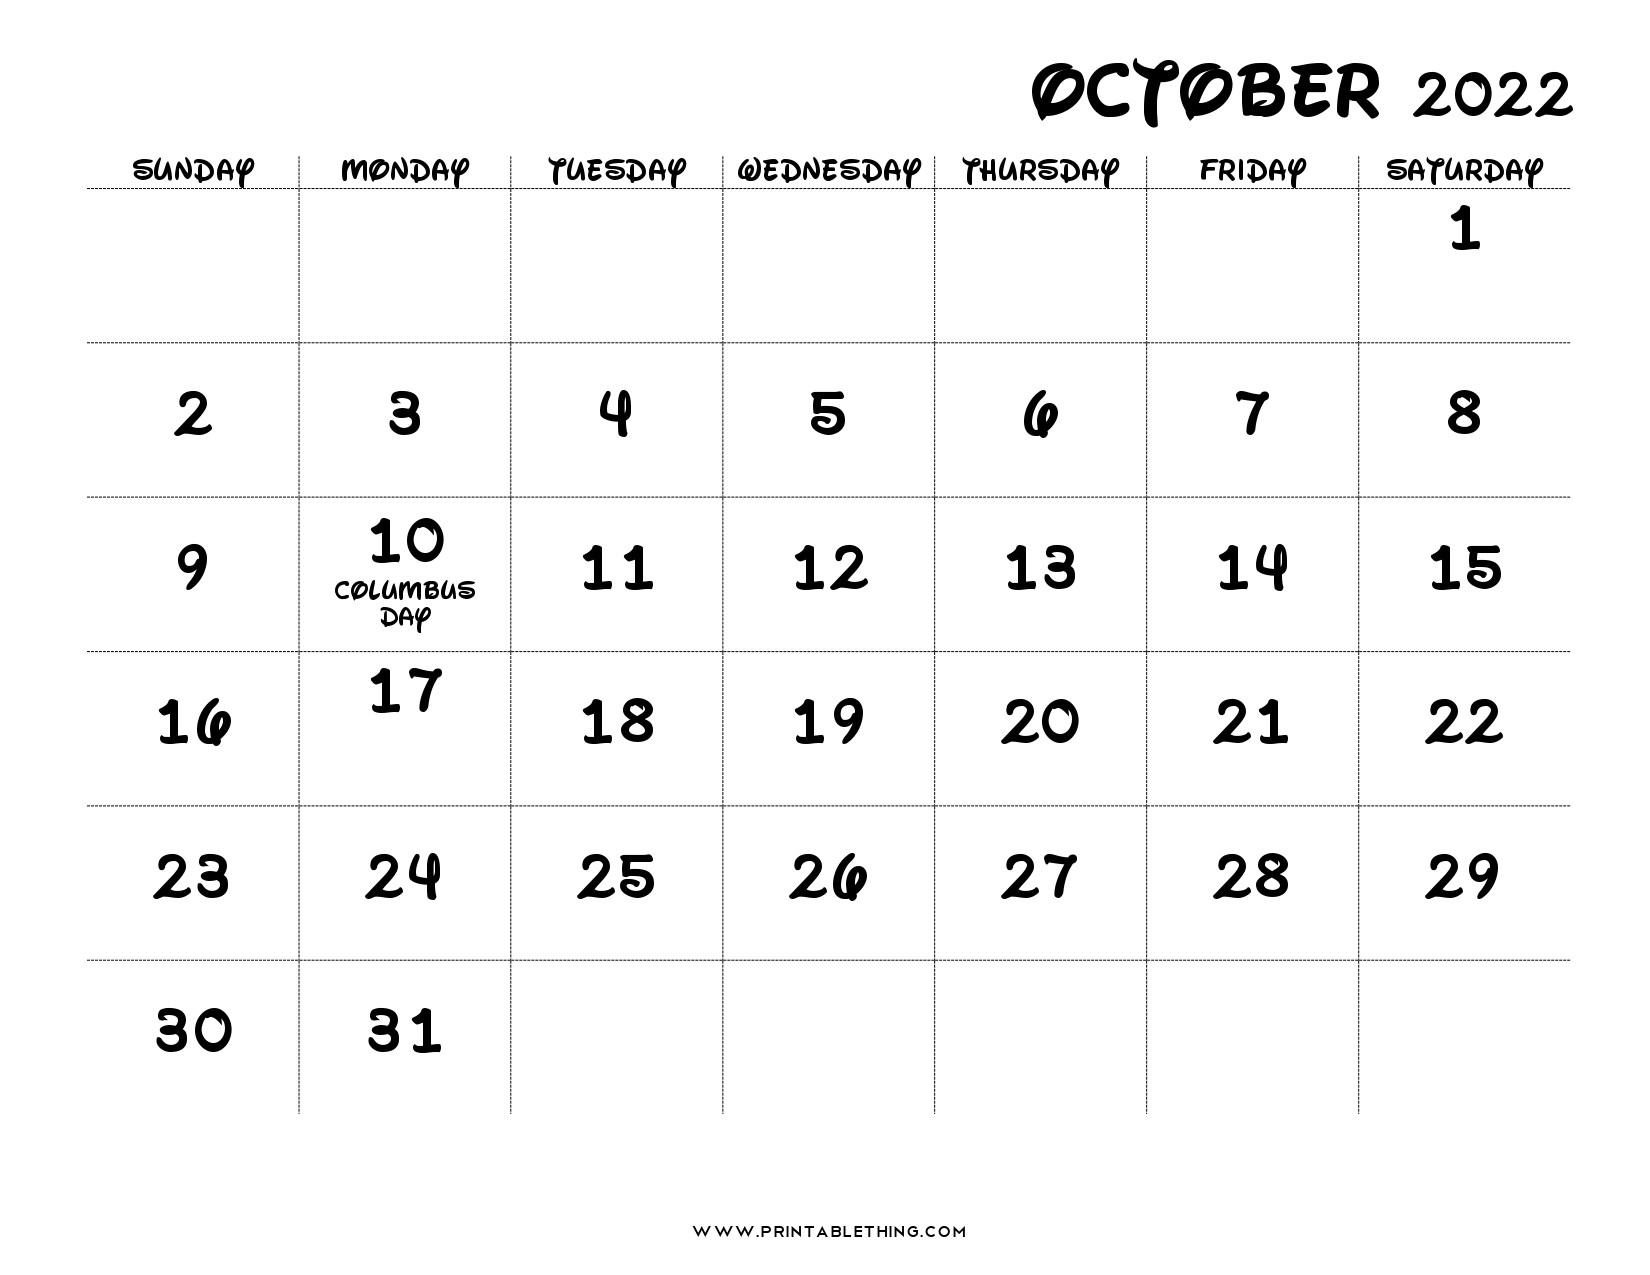 20+ October 2022 Calendar Printable, October 2022  October 2022 Calendar Printable